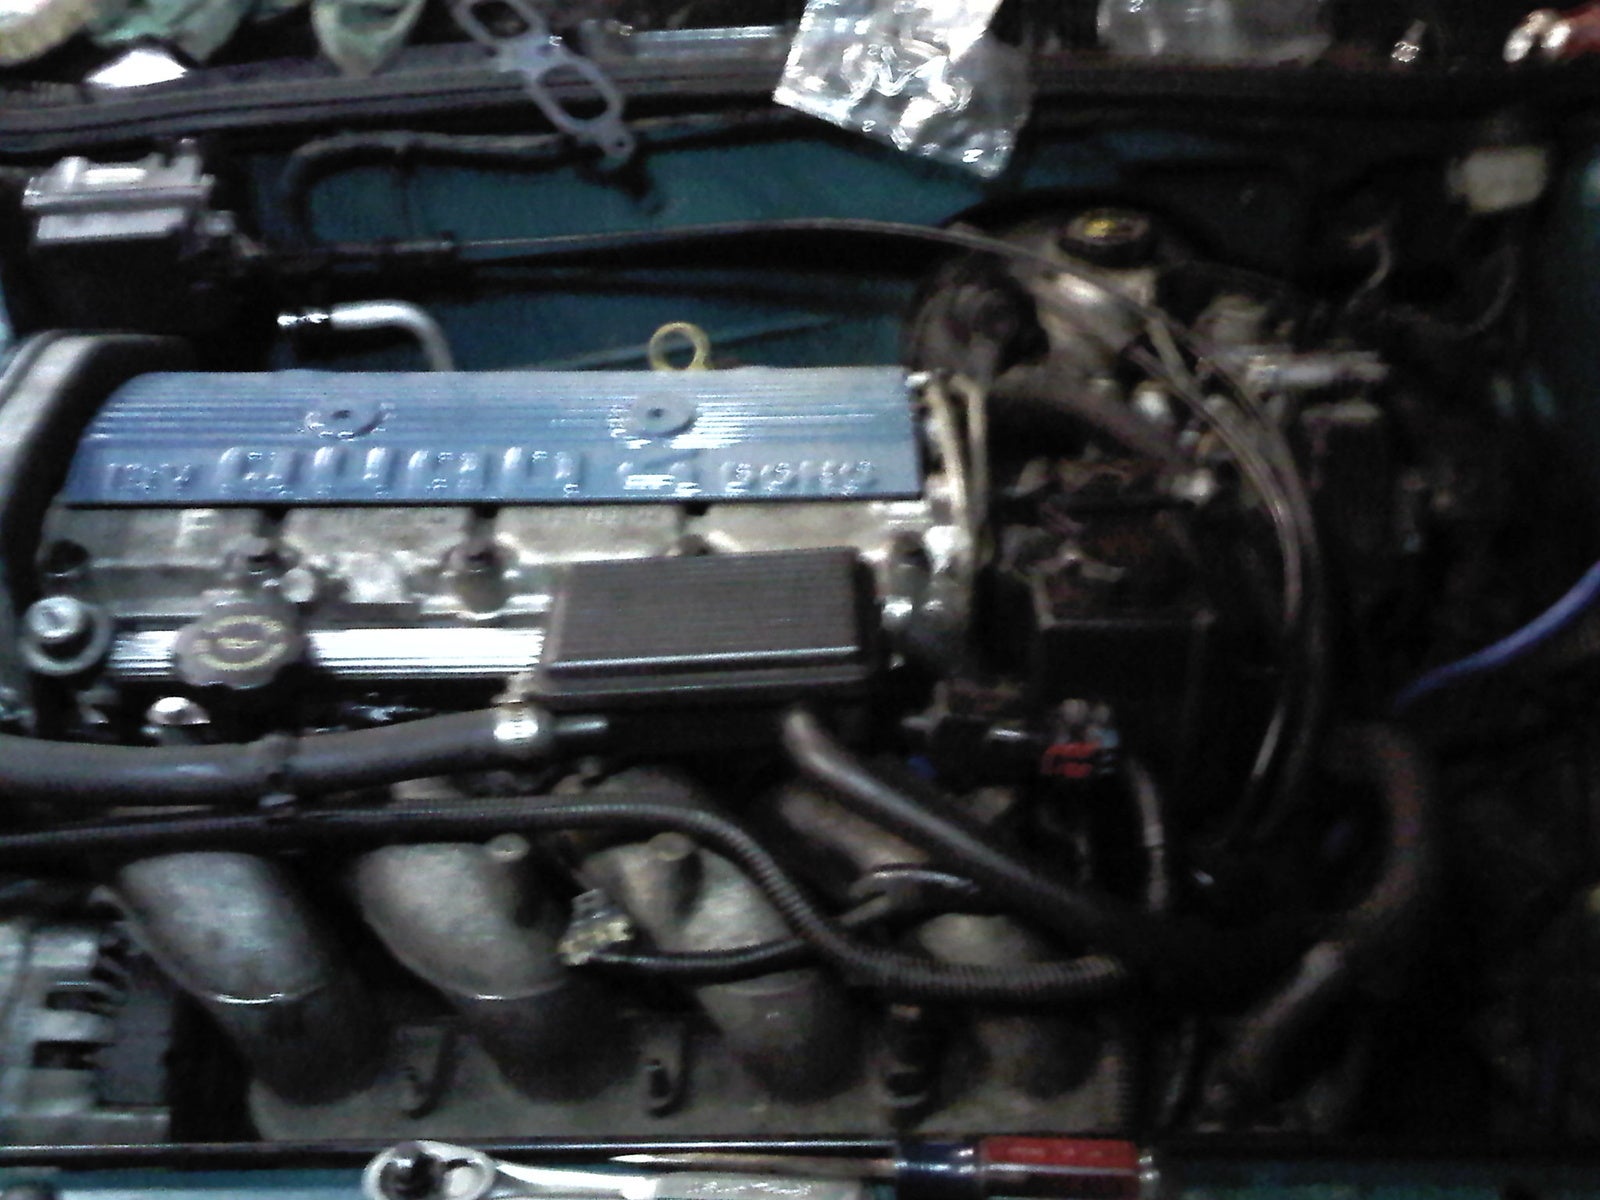 Chevy cavalier engine